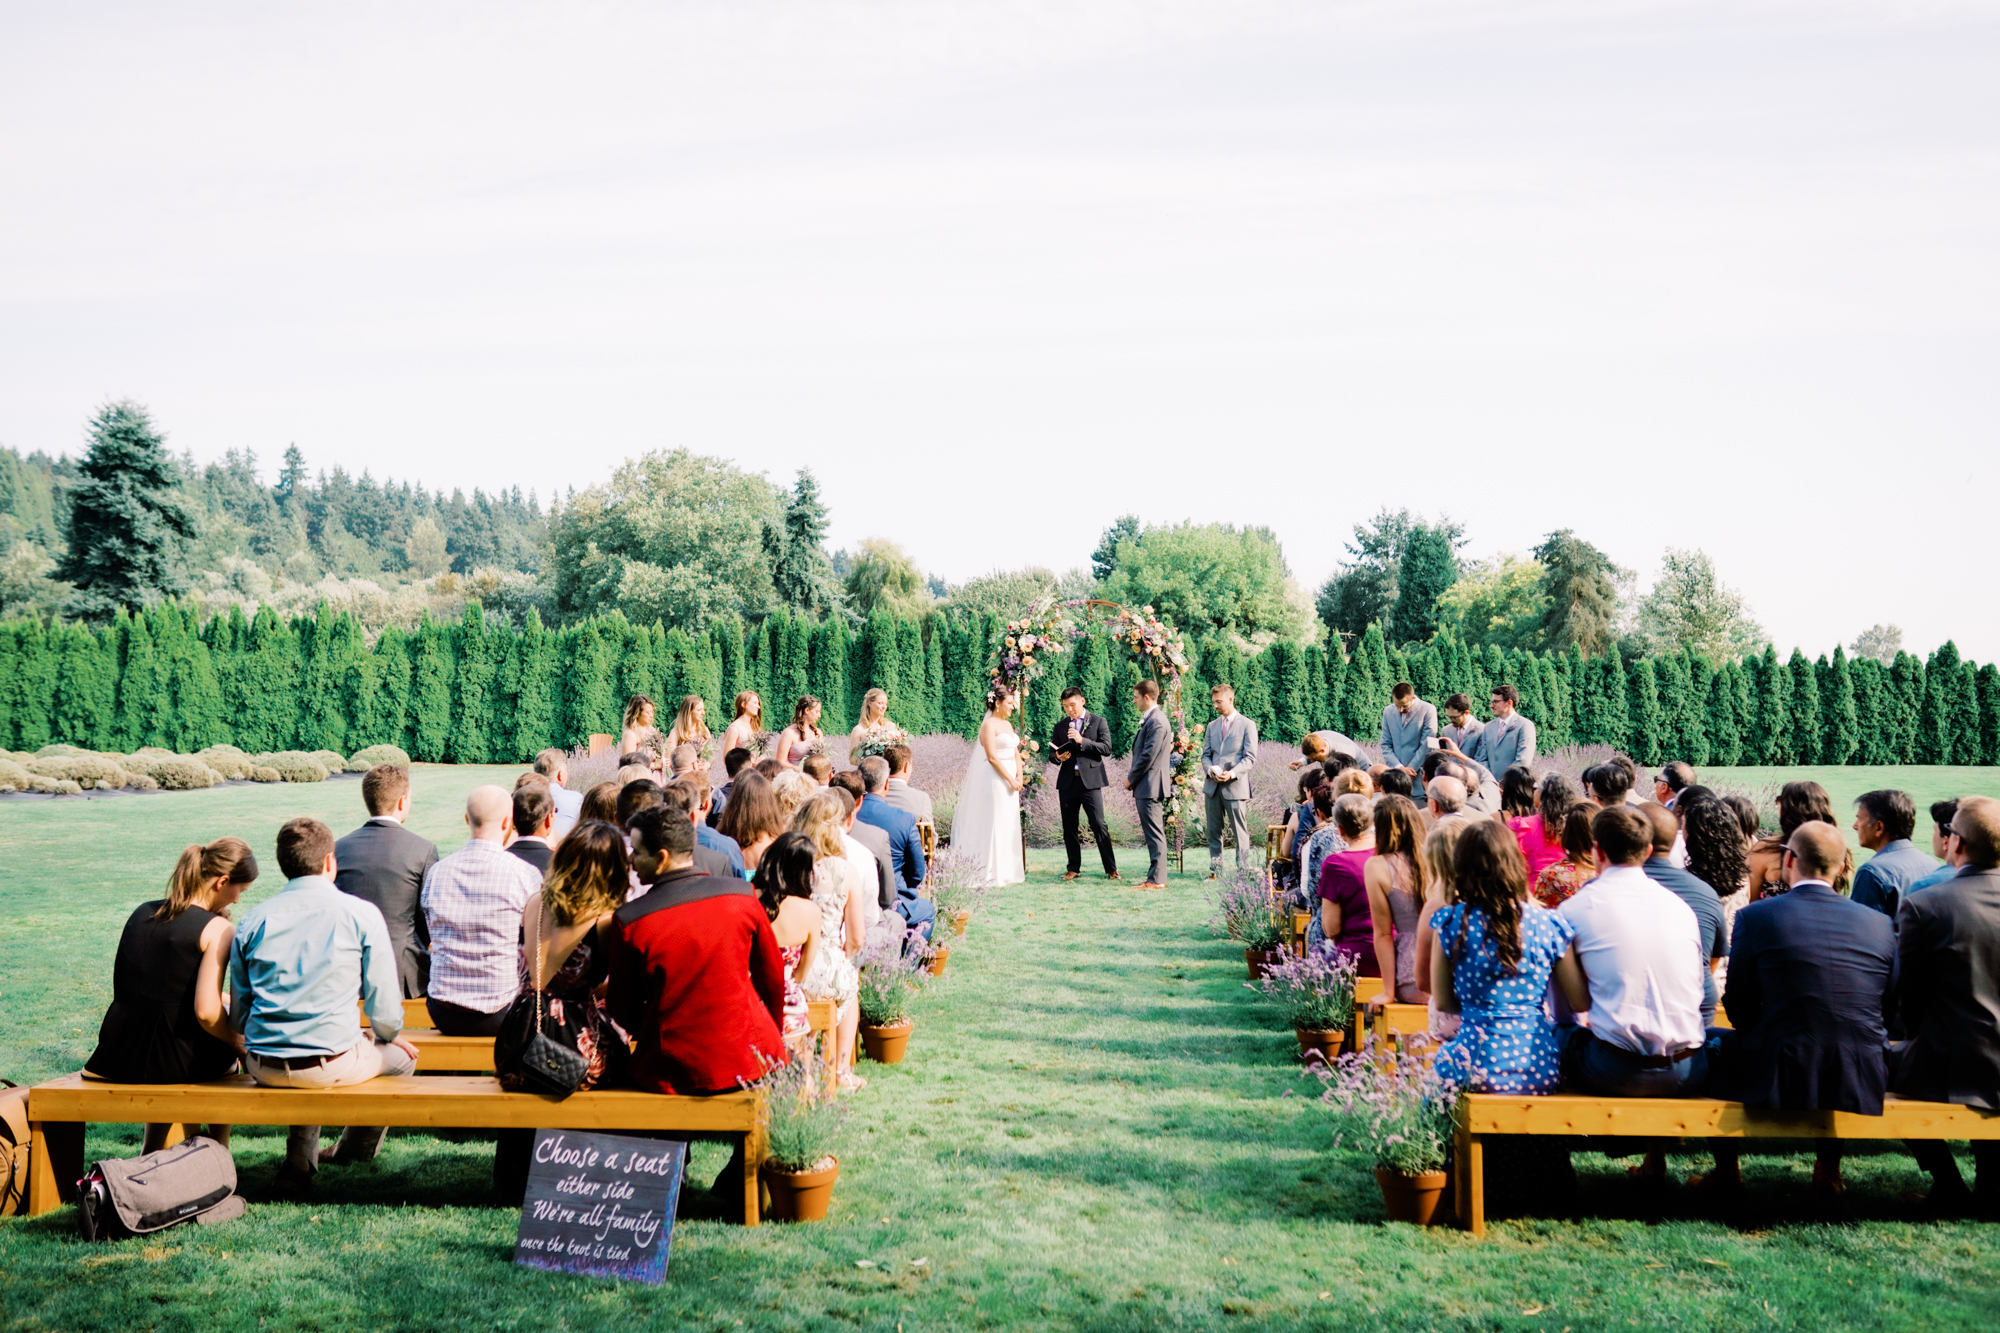 Woodinville Lavender Farm weddings: Wedding ceremony